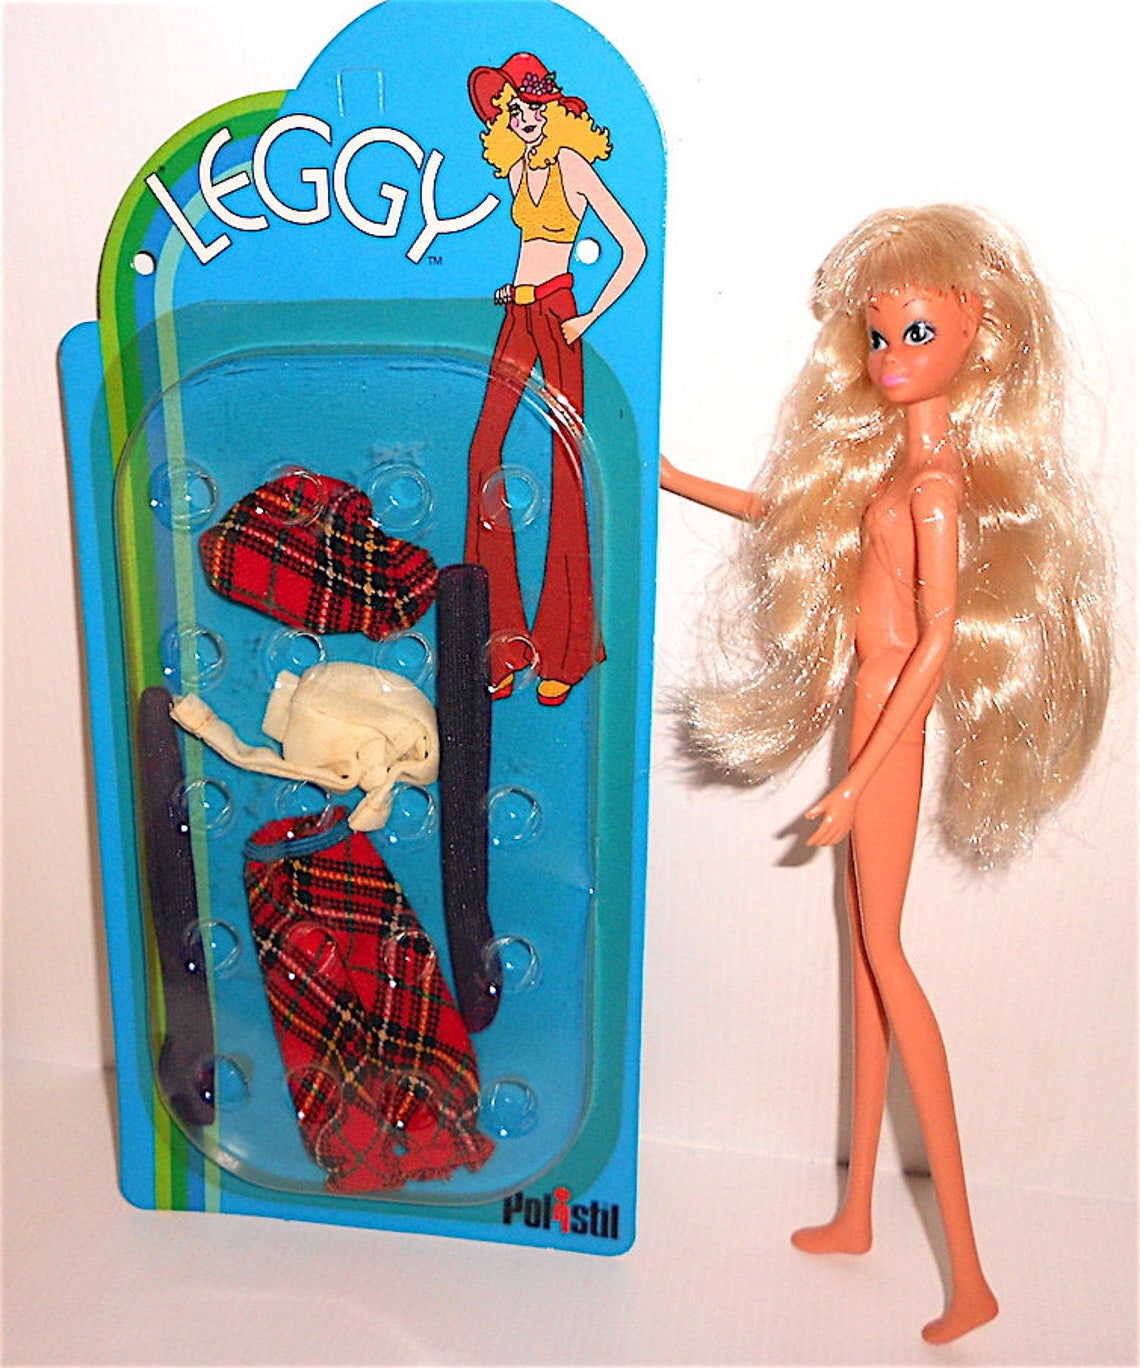 LEGGY 1970 Polistil italy doll outfit misb  vestito per image 0